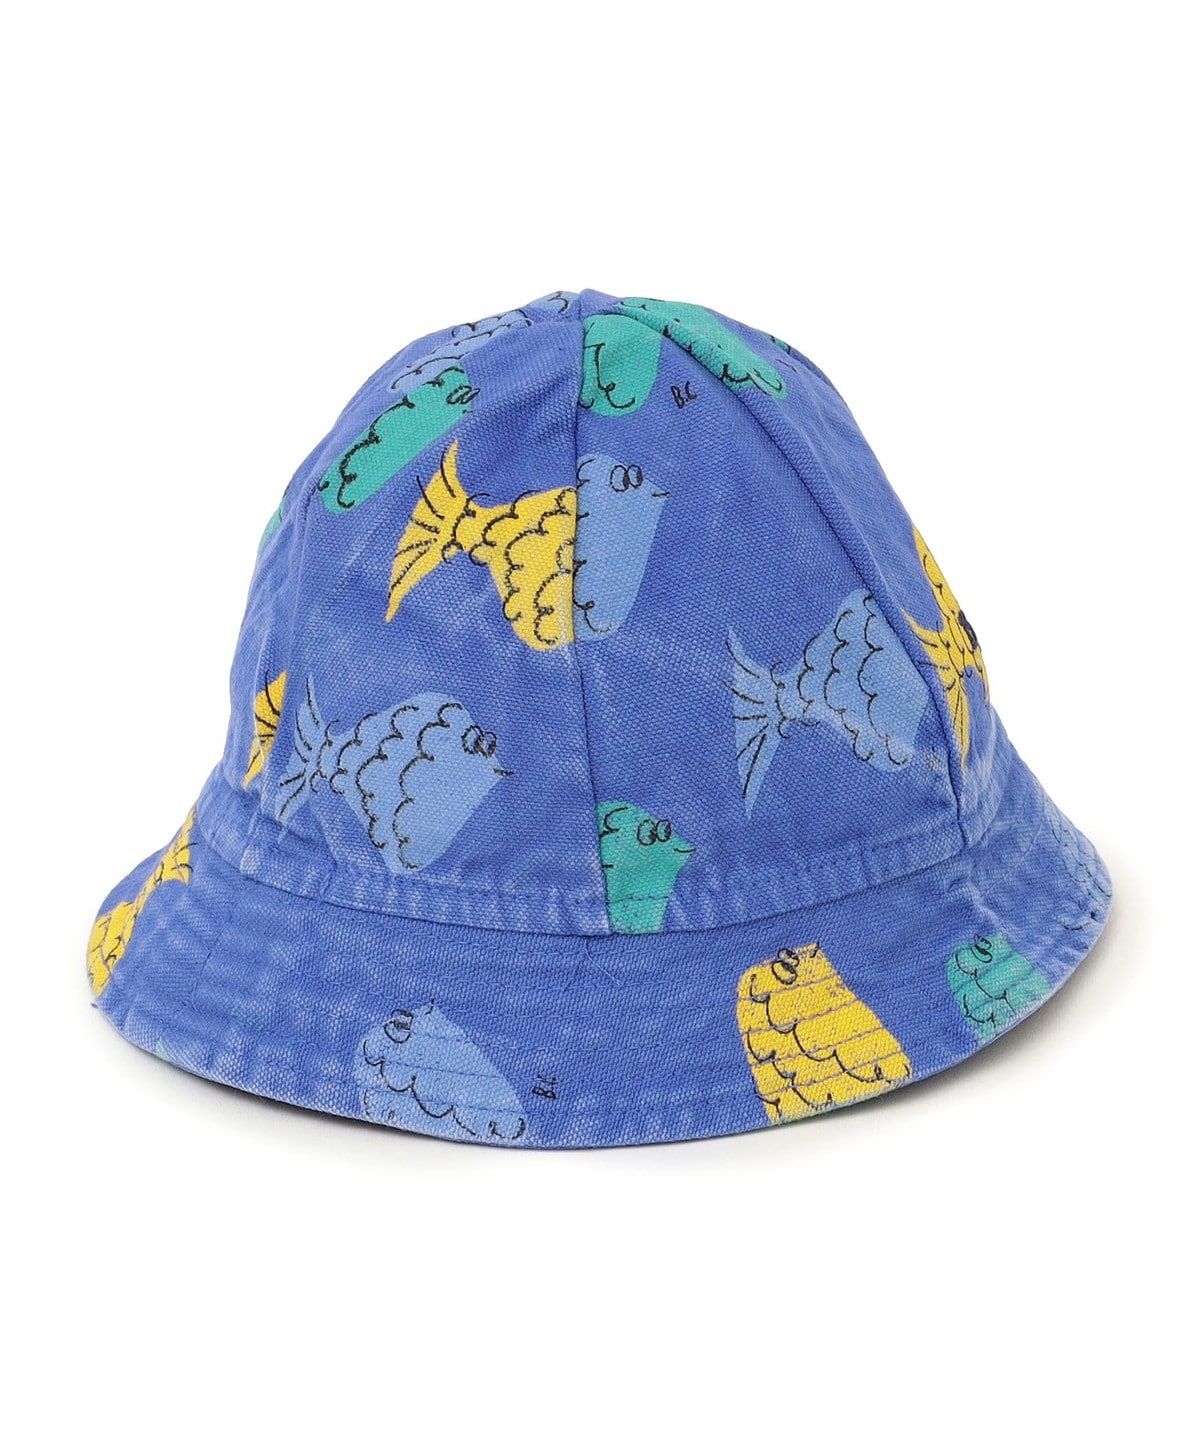 BOBO CHOSES:MULTICOLOR FISH ALL OVER HAT: 帽子 SHIPS 公式サイト